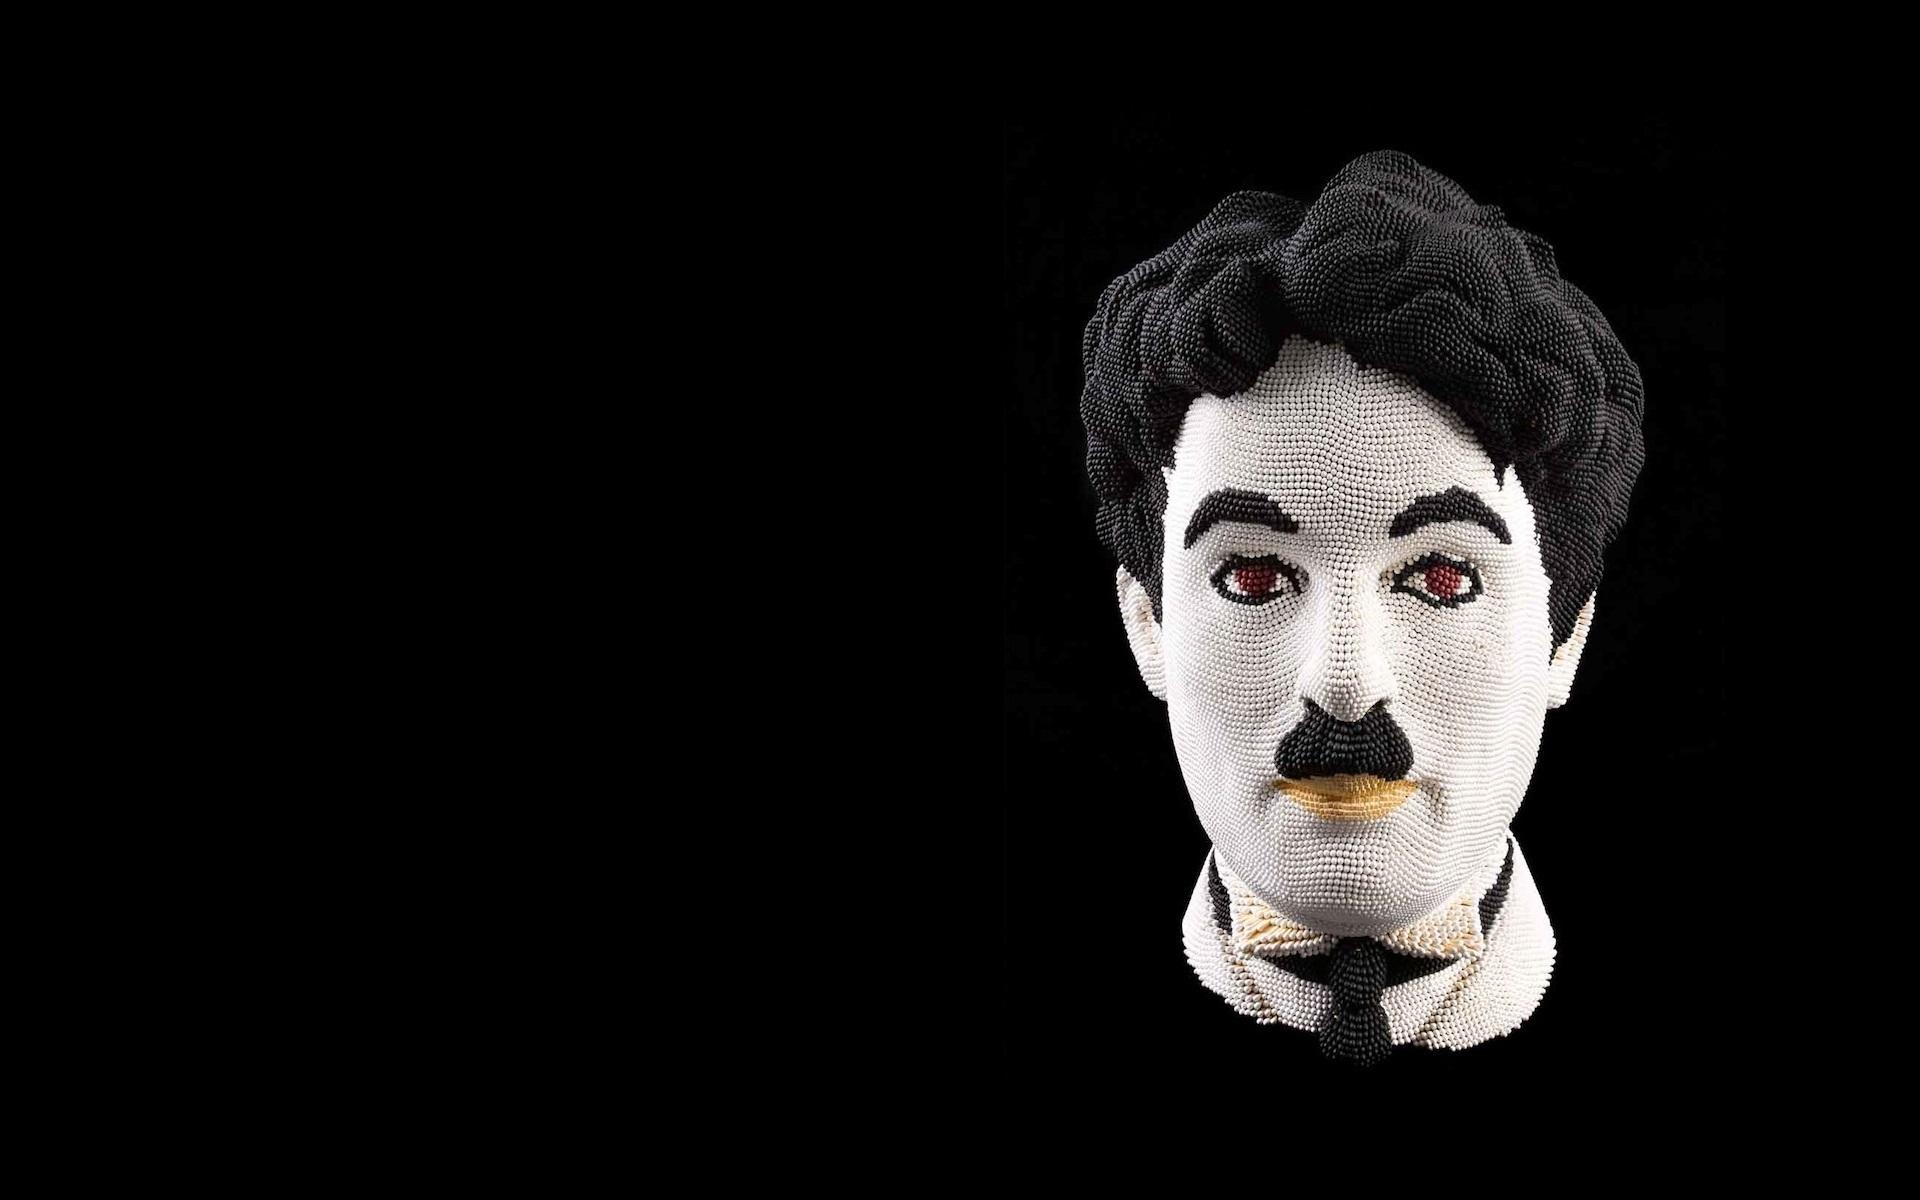 Charlie Chaplin, Comedian, Sculpture - Sculptures Of Famous People - HD Wallpaper 